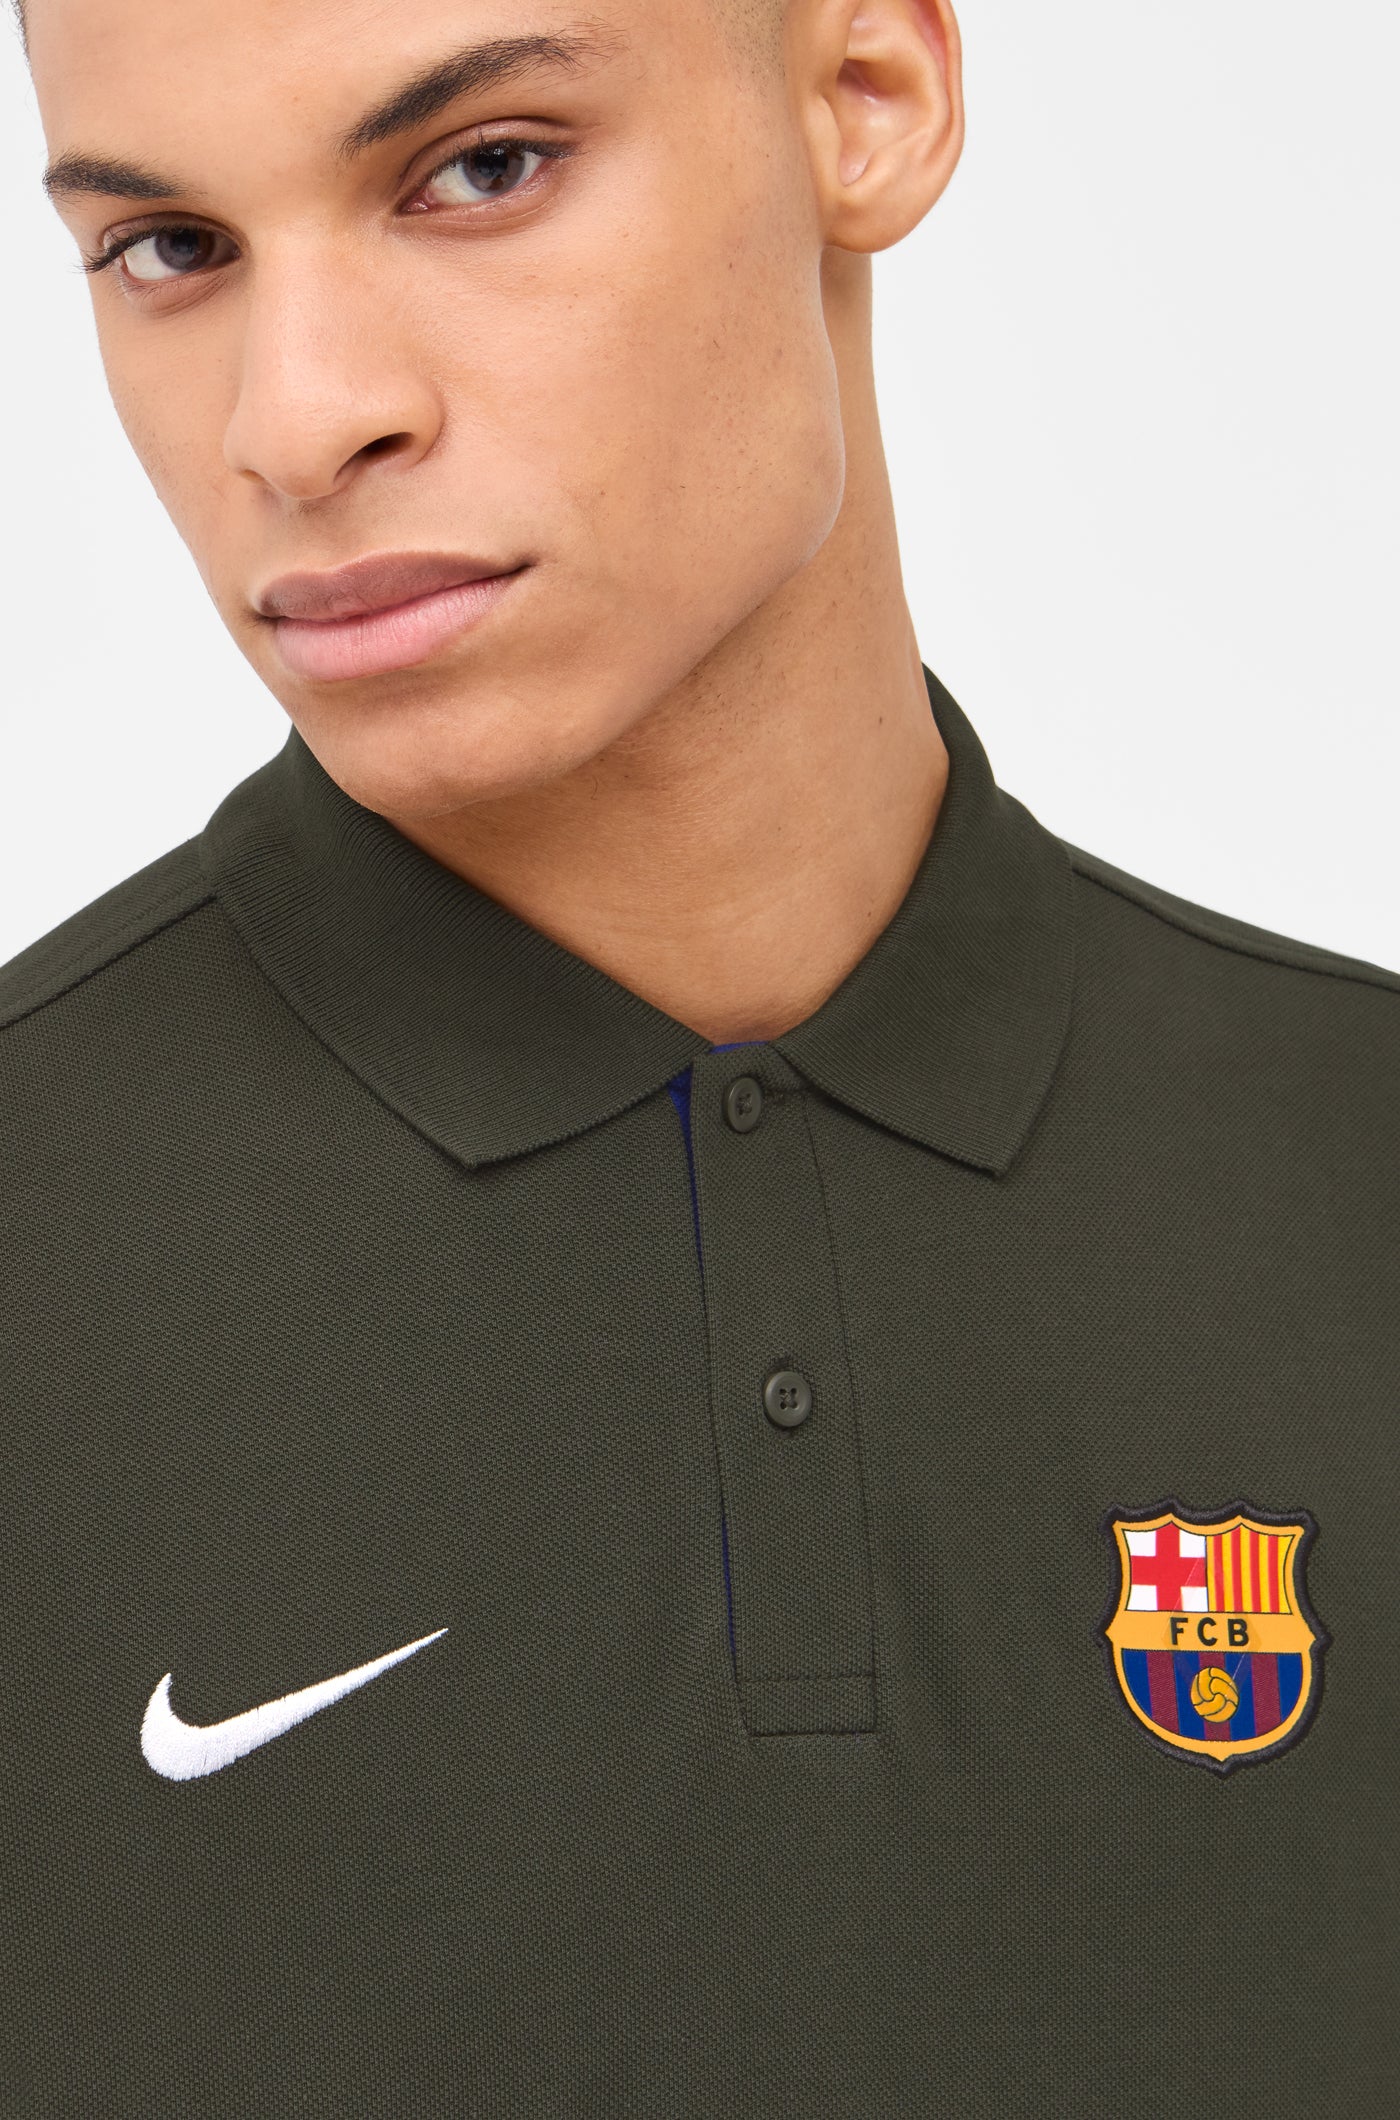 Grünes Schild-Poloshirt Barça Nike